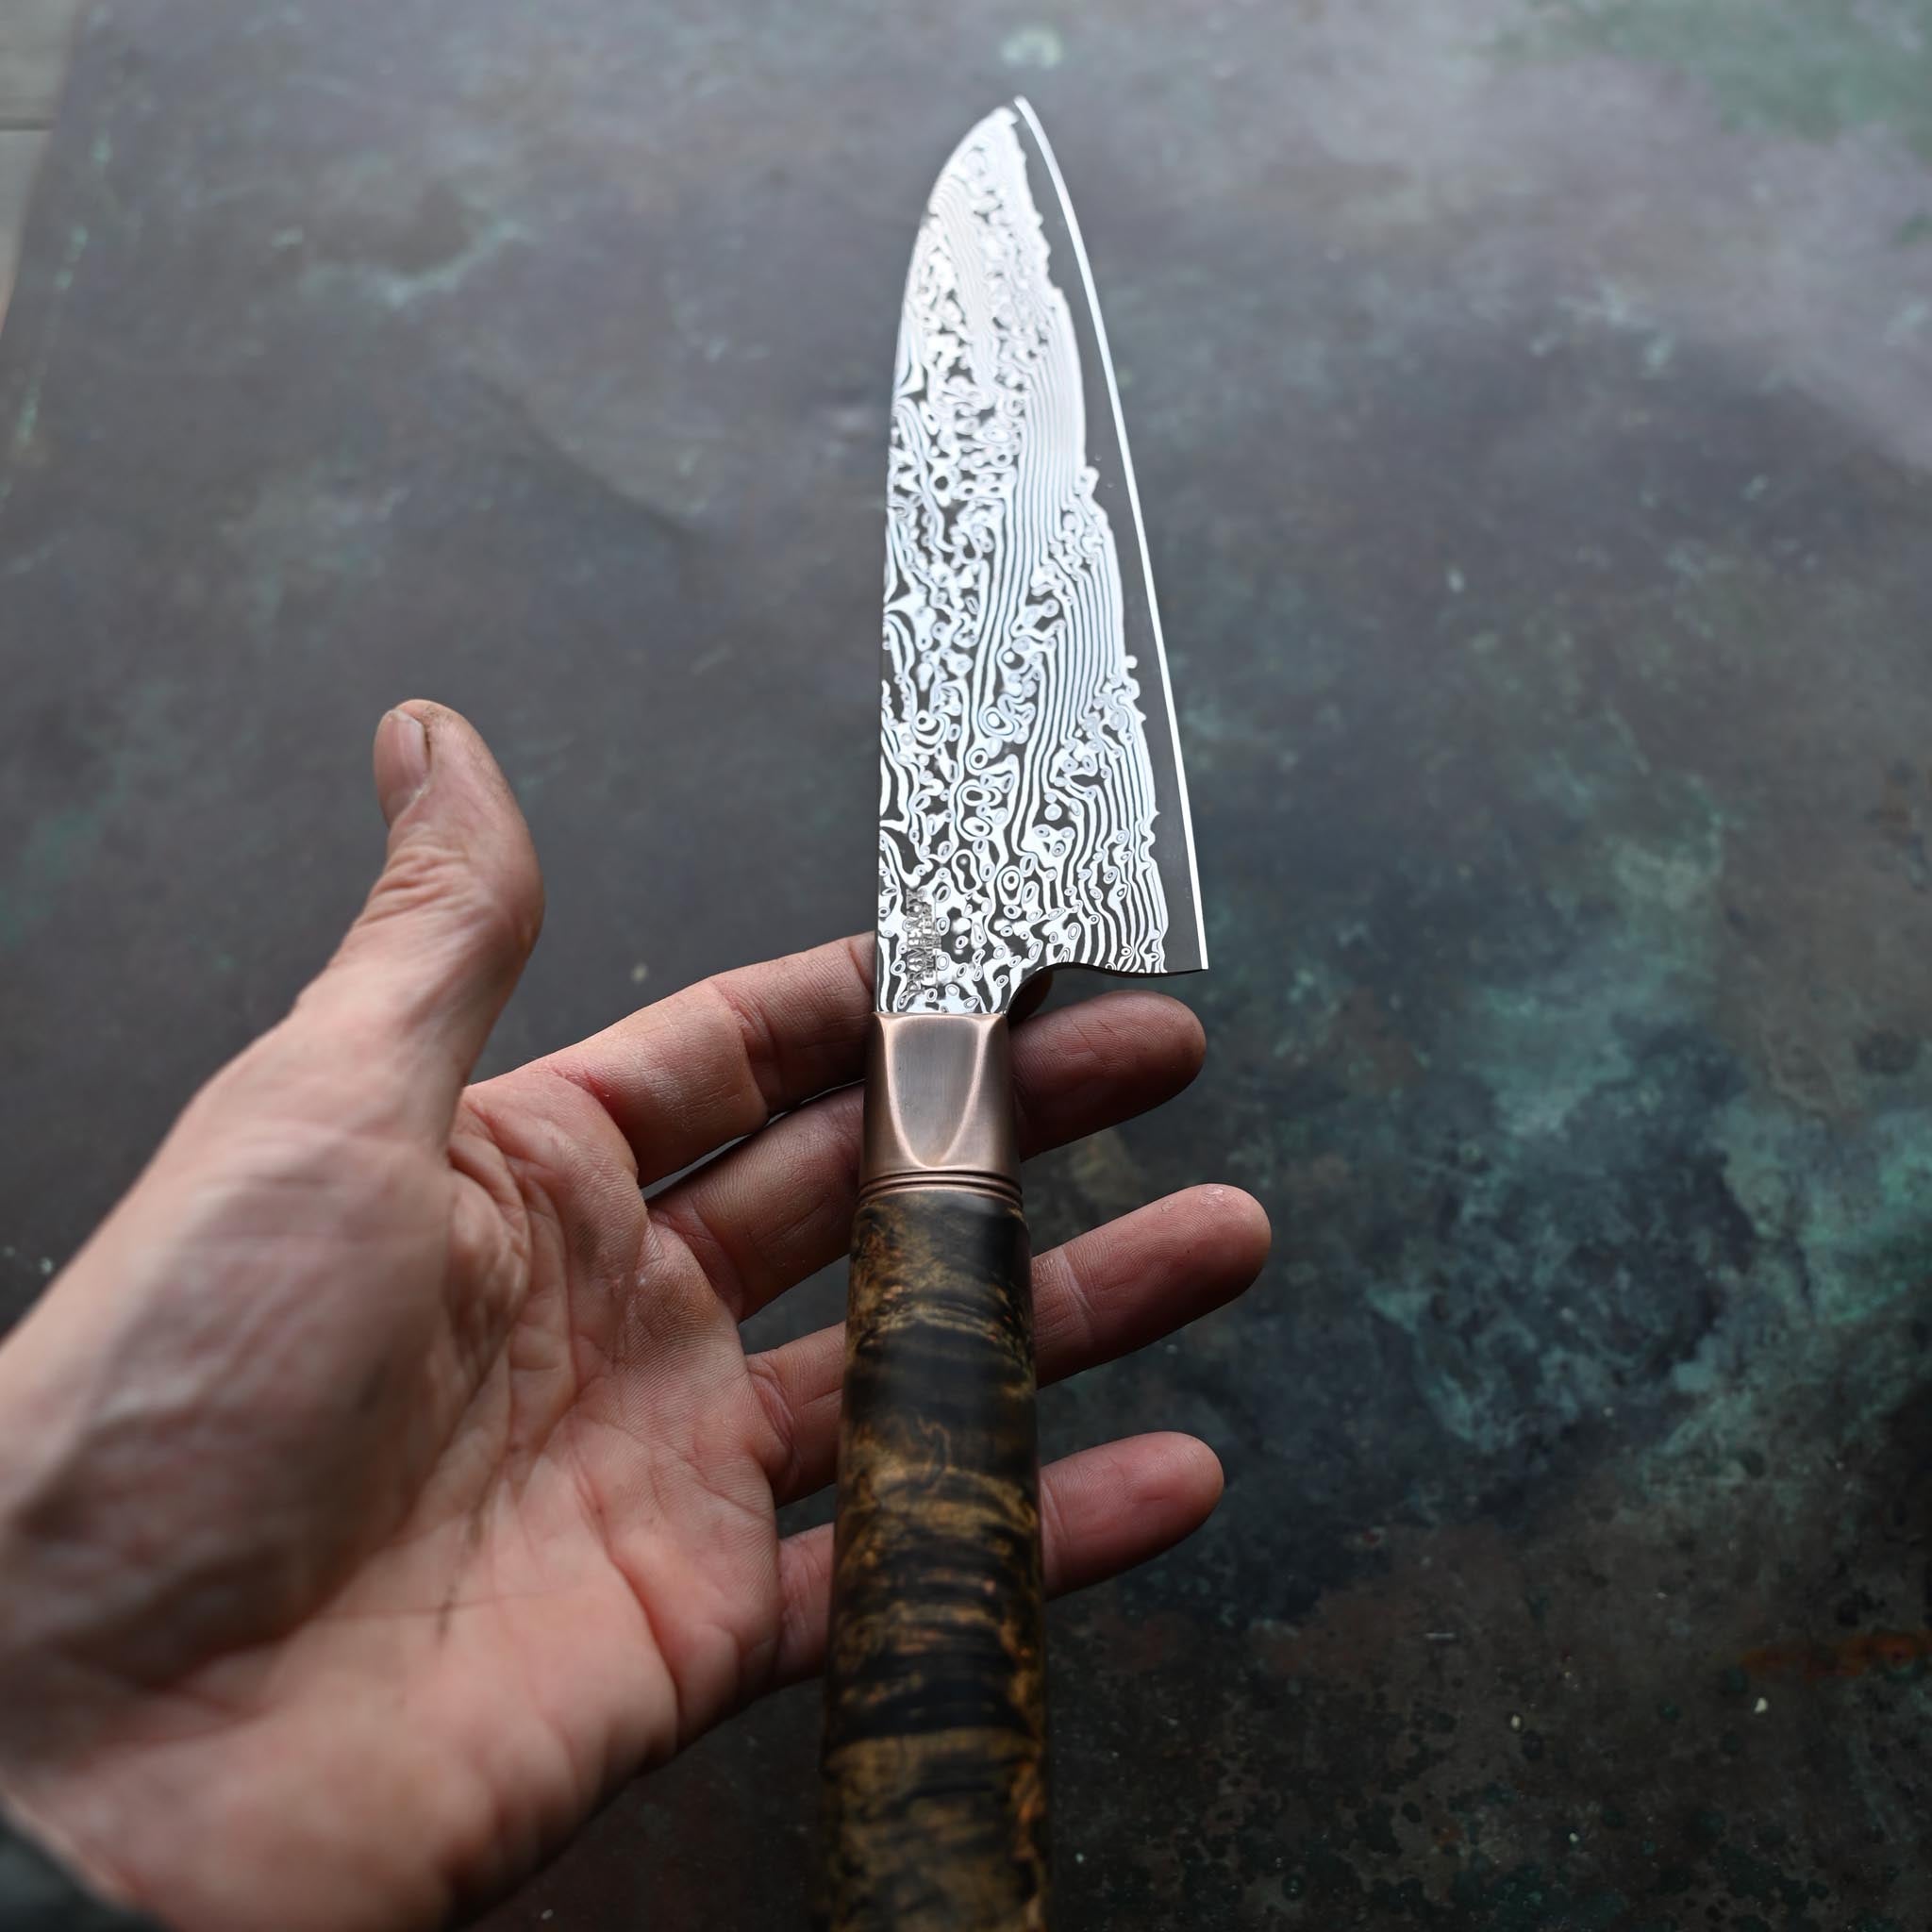 Lion Sabatier Athos knife set 4-piece, 910480